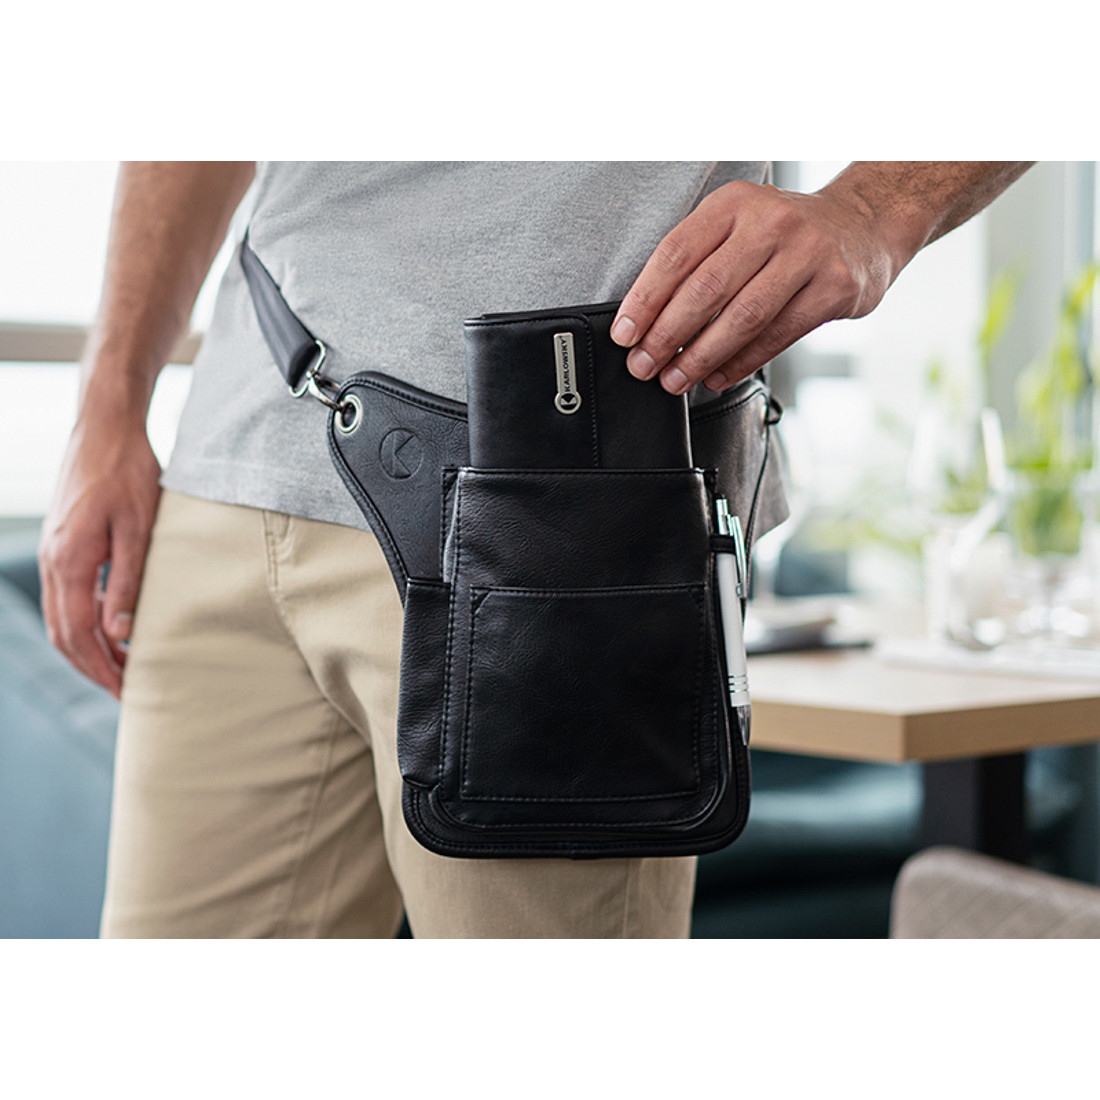 Zapatilla extra-large para camarero con arnés integrado para cinturón, Ropa  - SafetyOne